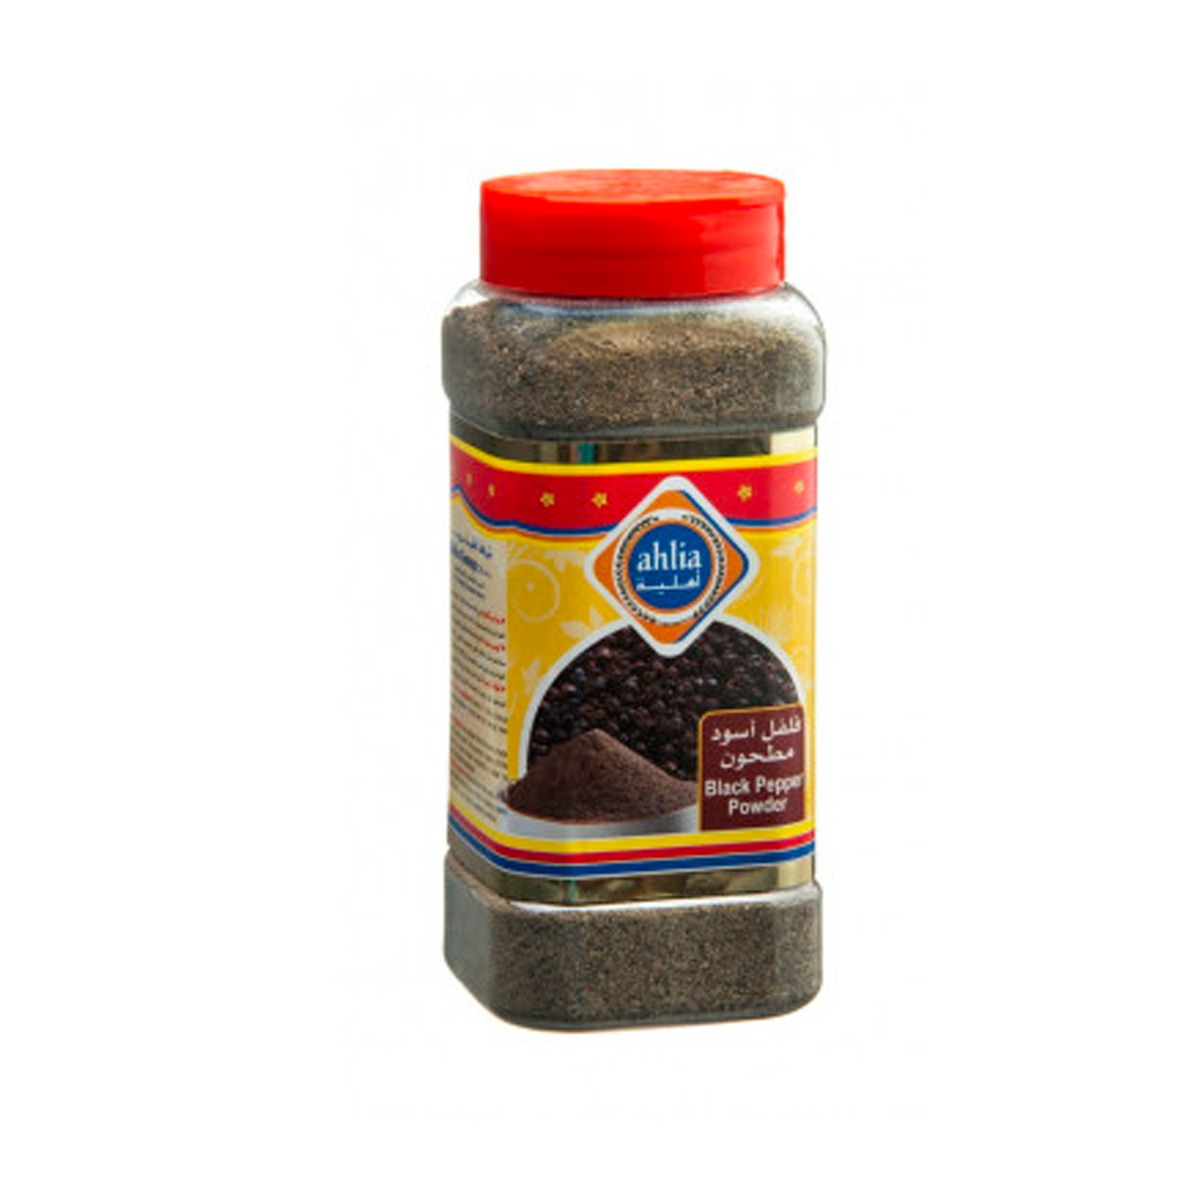 Ahlia Black Pepper Powder Value Pack 250g